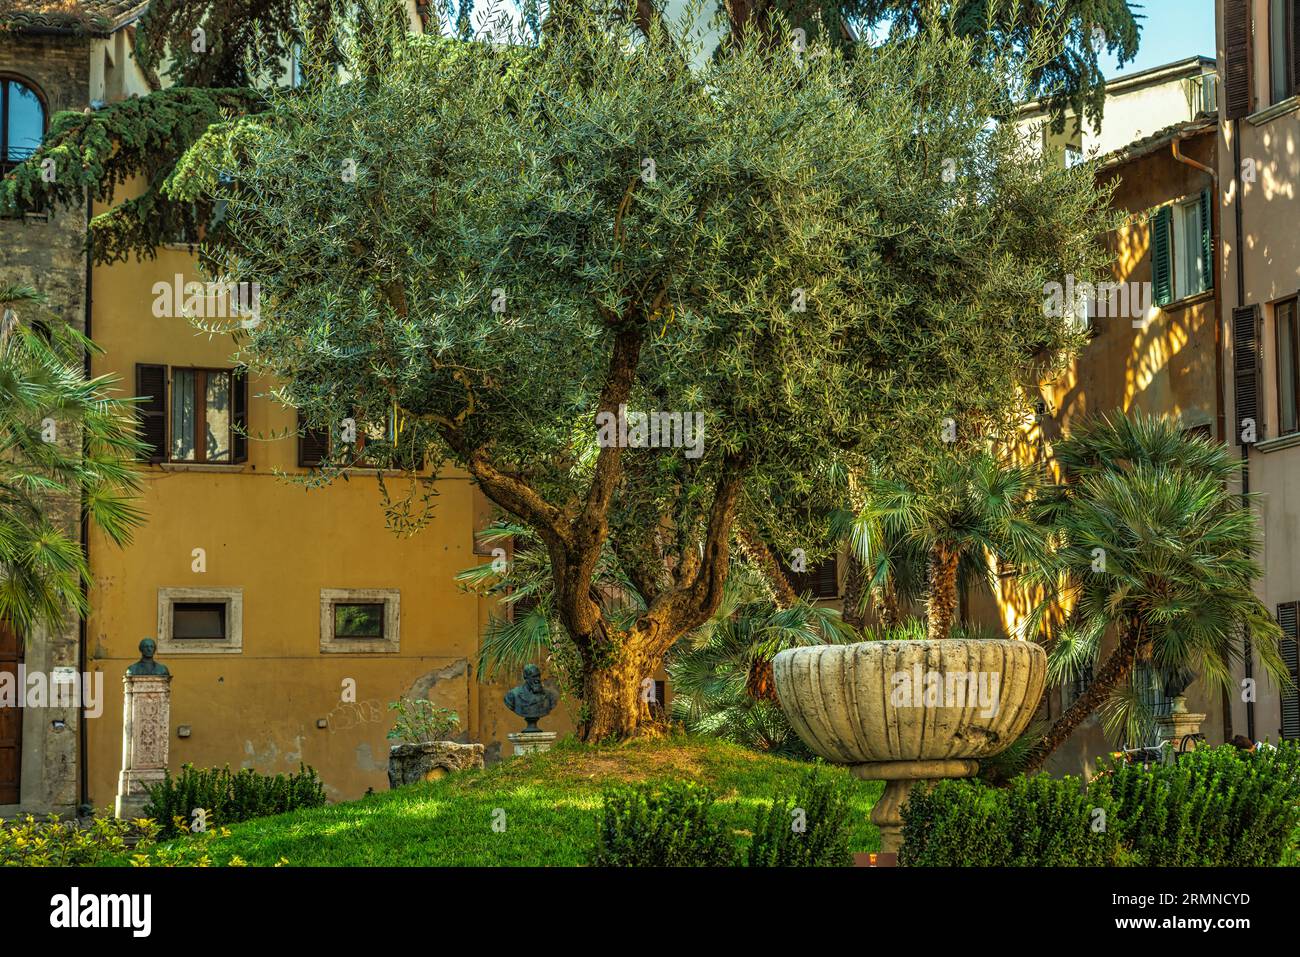 Olive tree of the species 'Oliva tenera ascolana'. The famous food Oliva Ascolana is produced from this species. Ascoli Piceno, Marche region, Italy, Stock Photo